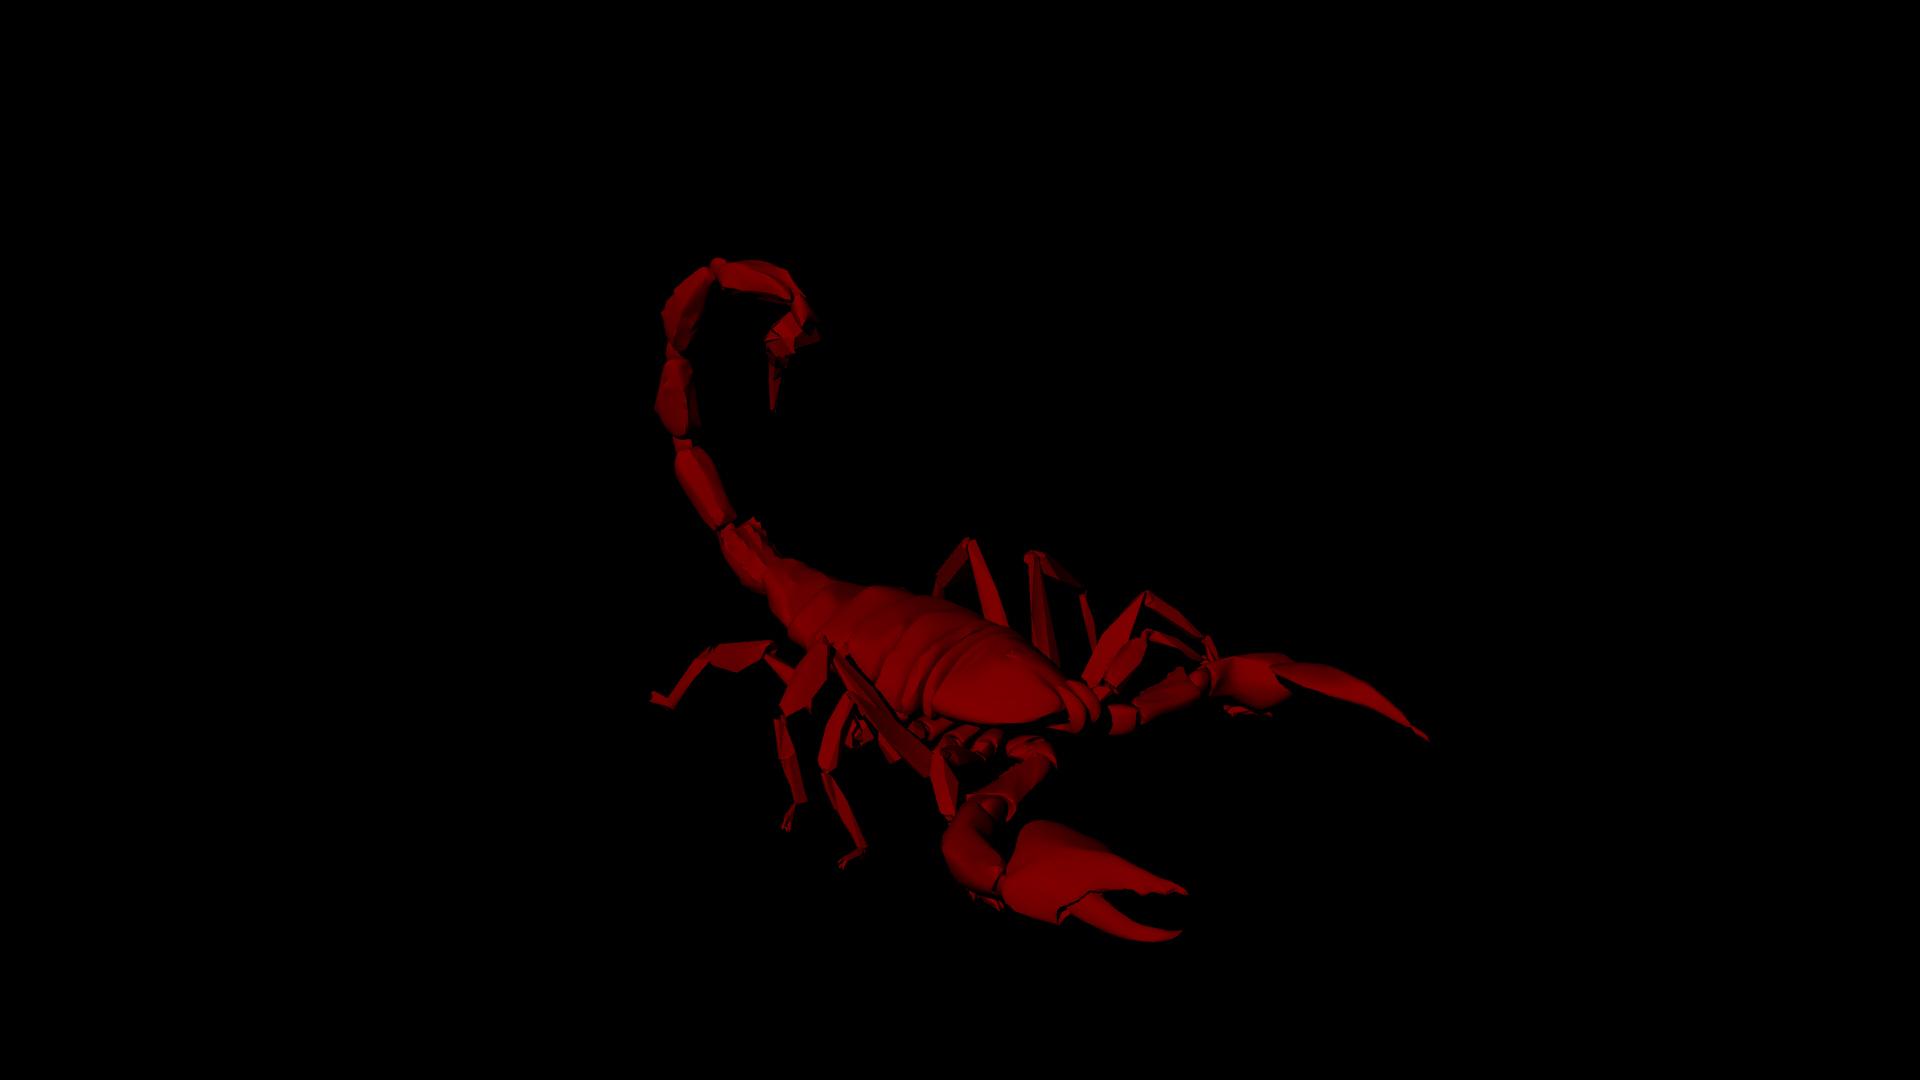 White Scorpion Logo - Index of /images/more.....scorpion logo